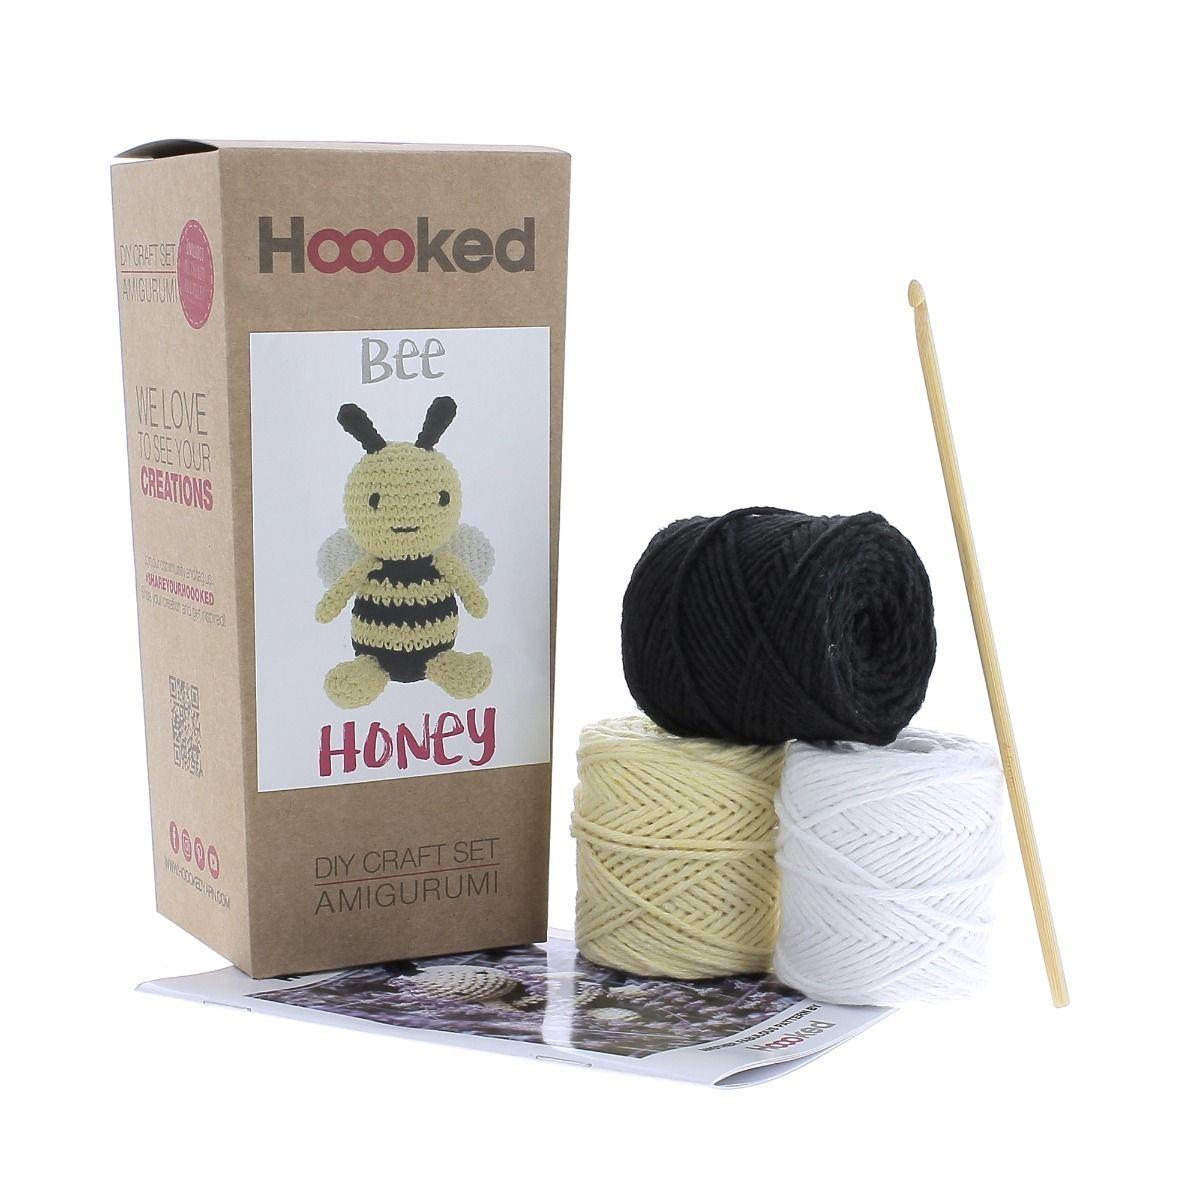 [Hoooked] PAK279 Eco Barbante Milano Popcorn Cotton Bee Honey Crochet Amigurumi Kit